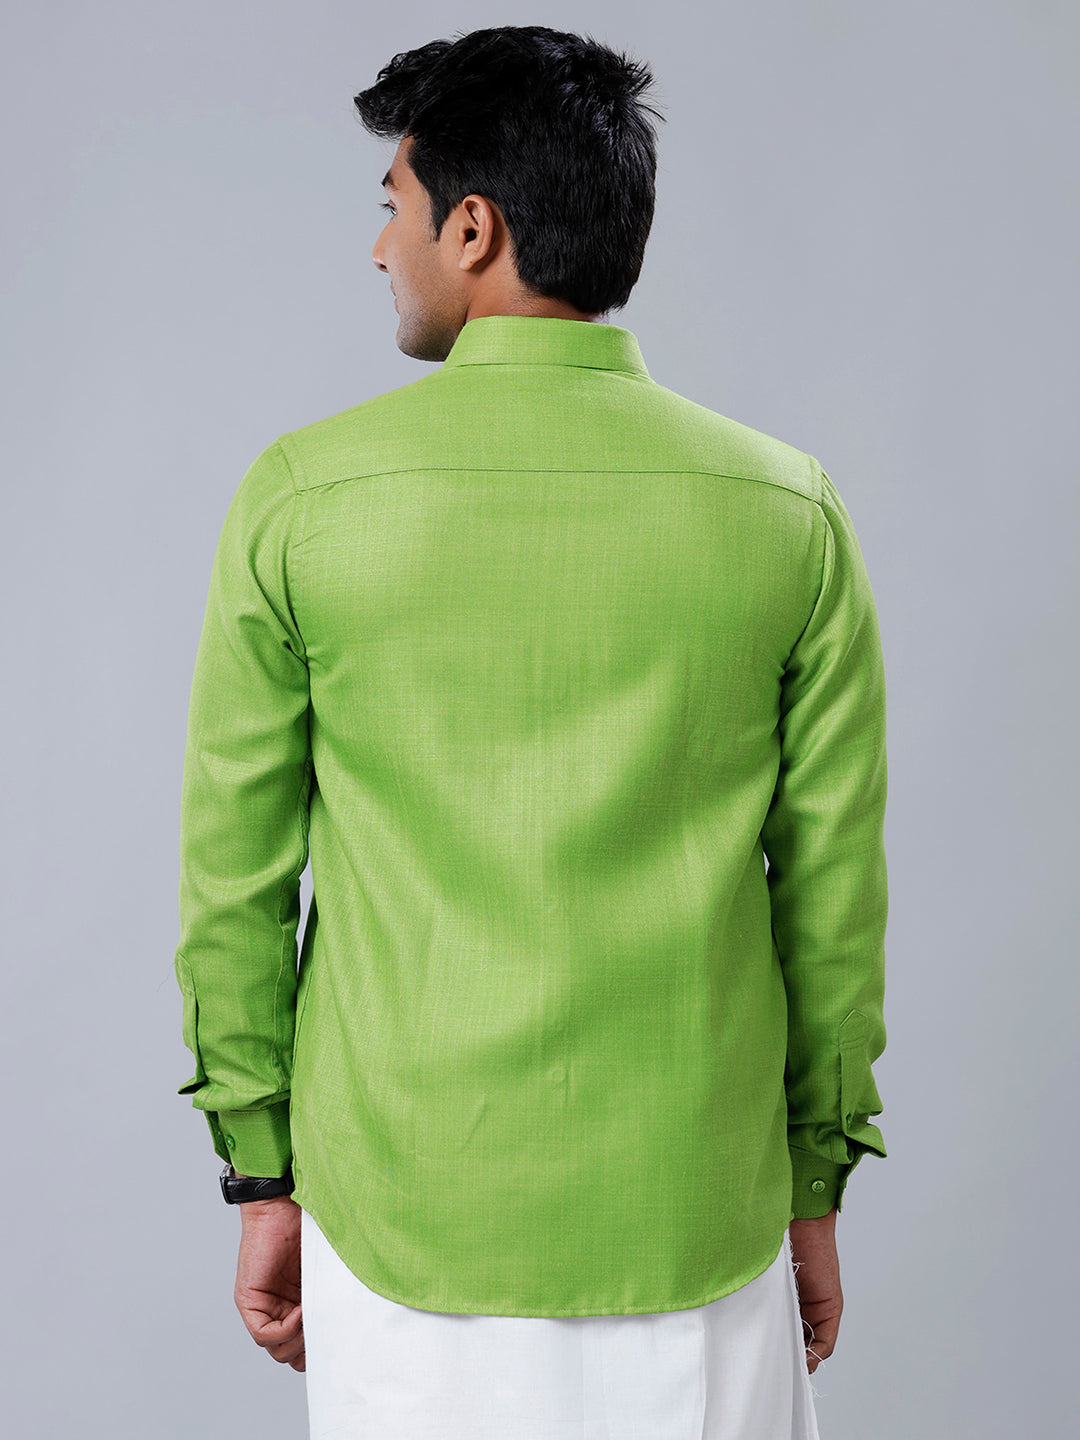 Mens Formal Shirt Full Sleeves Parrot Green T41 TQ8-Back view